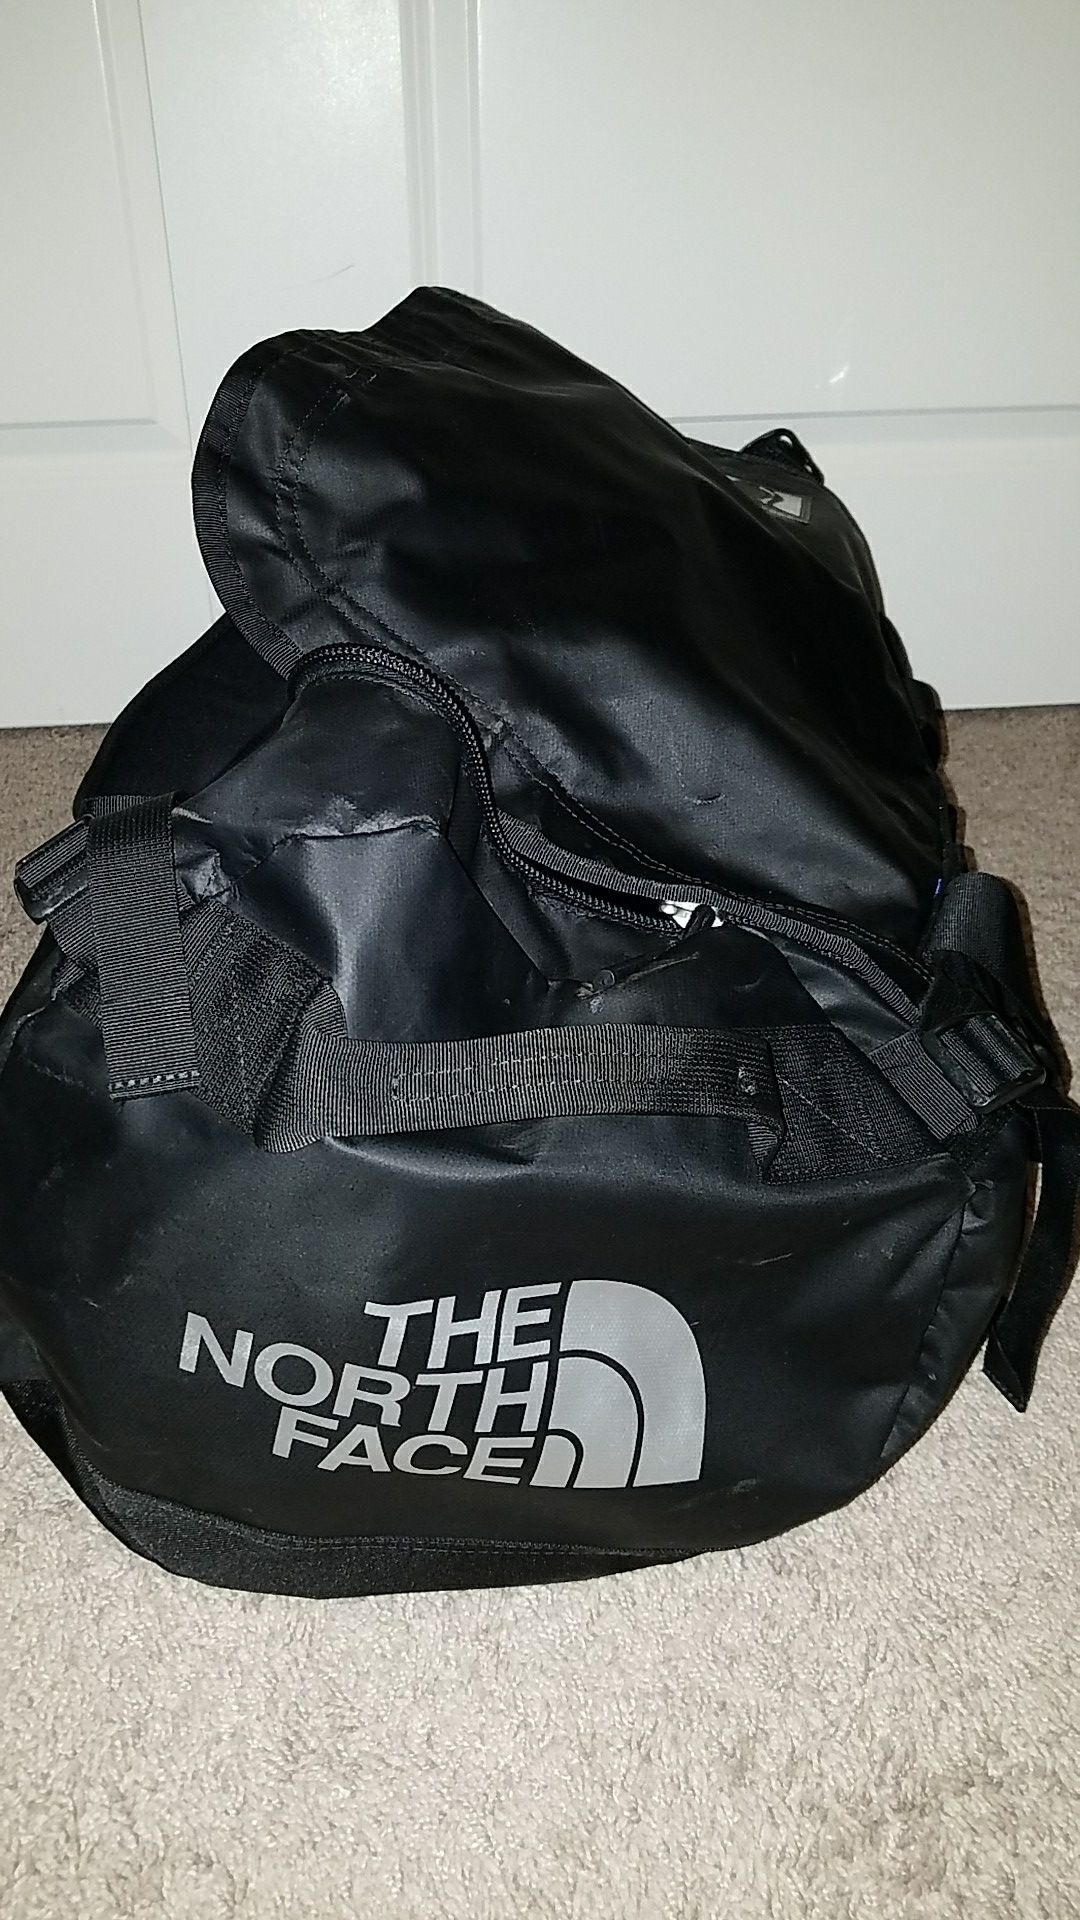 North Face Base Camp Duffle Bag (Medium)